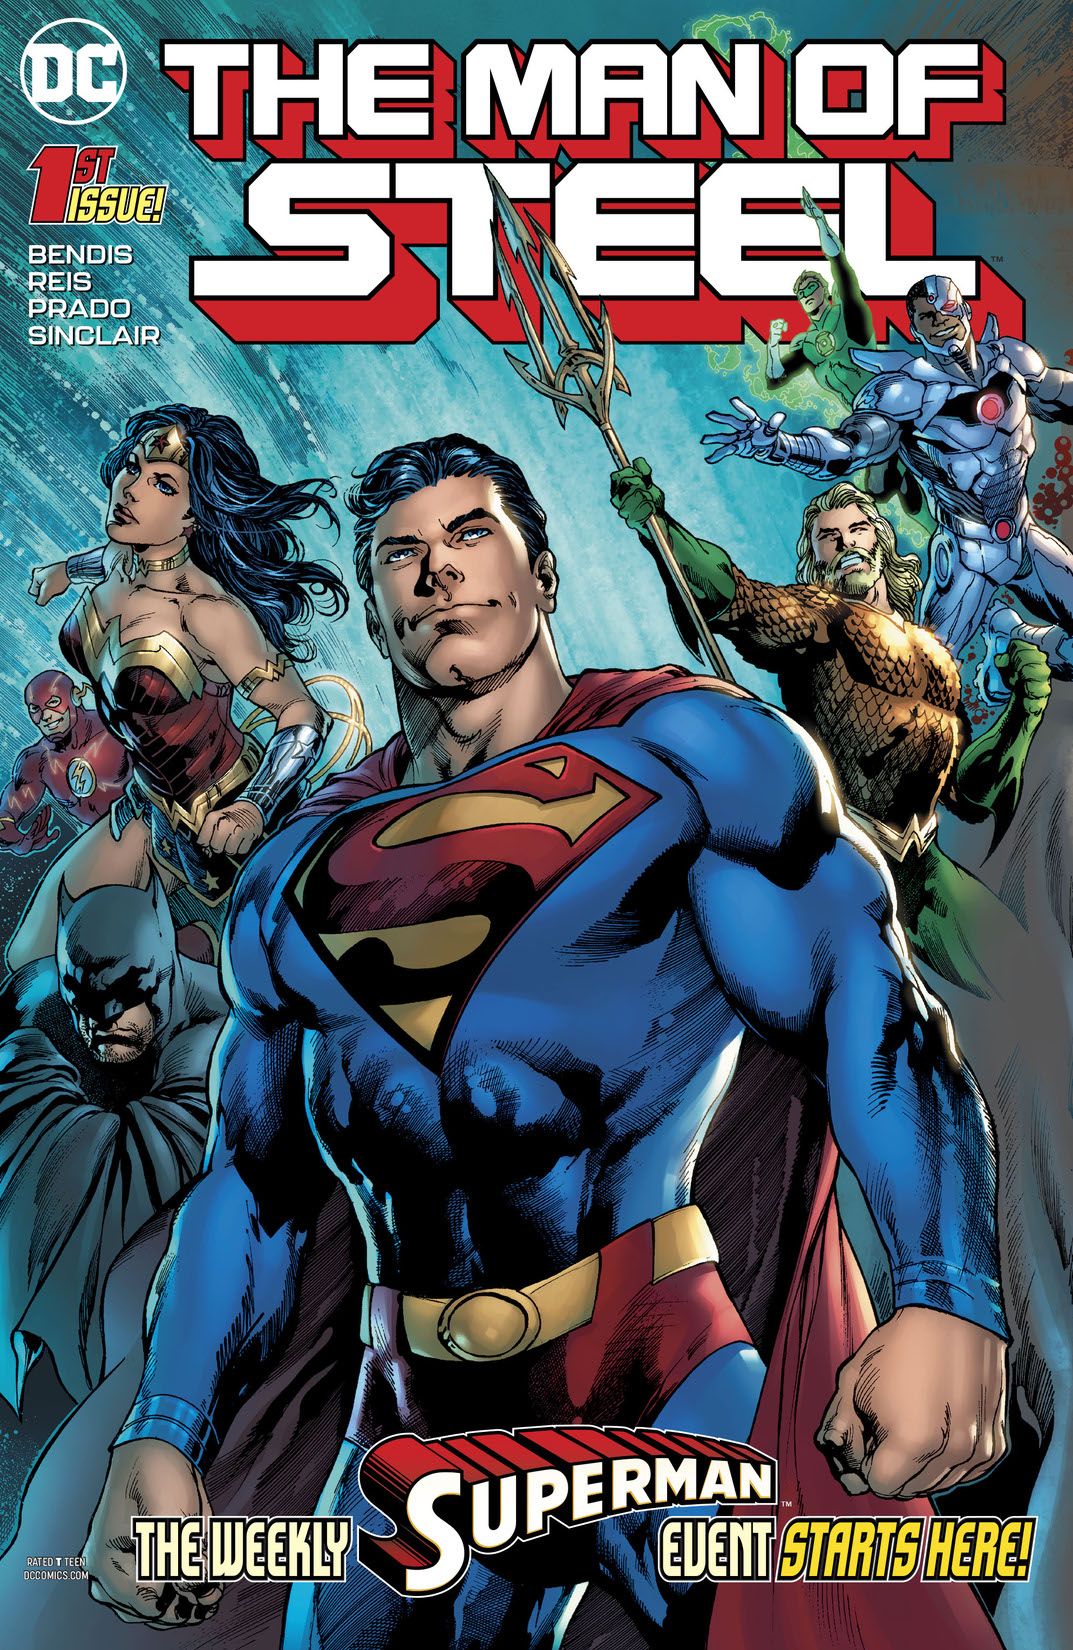 Brian Michael Bendis rebooted Superman...somewhat